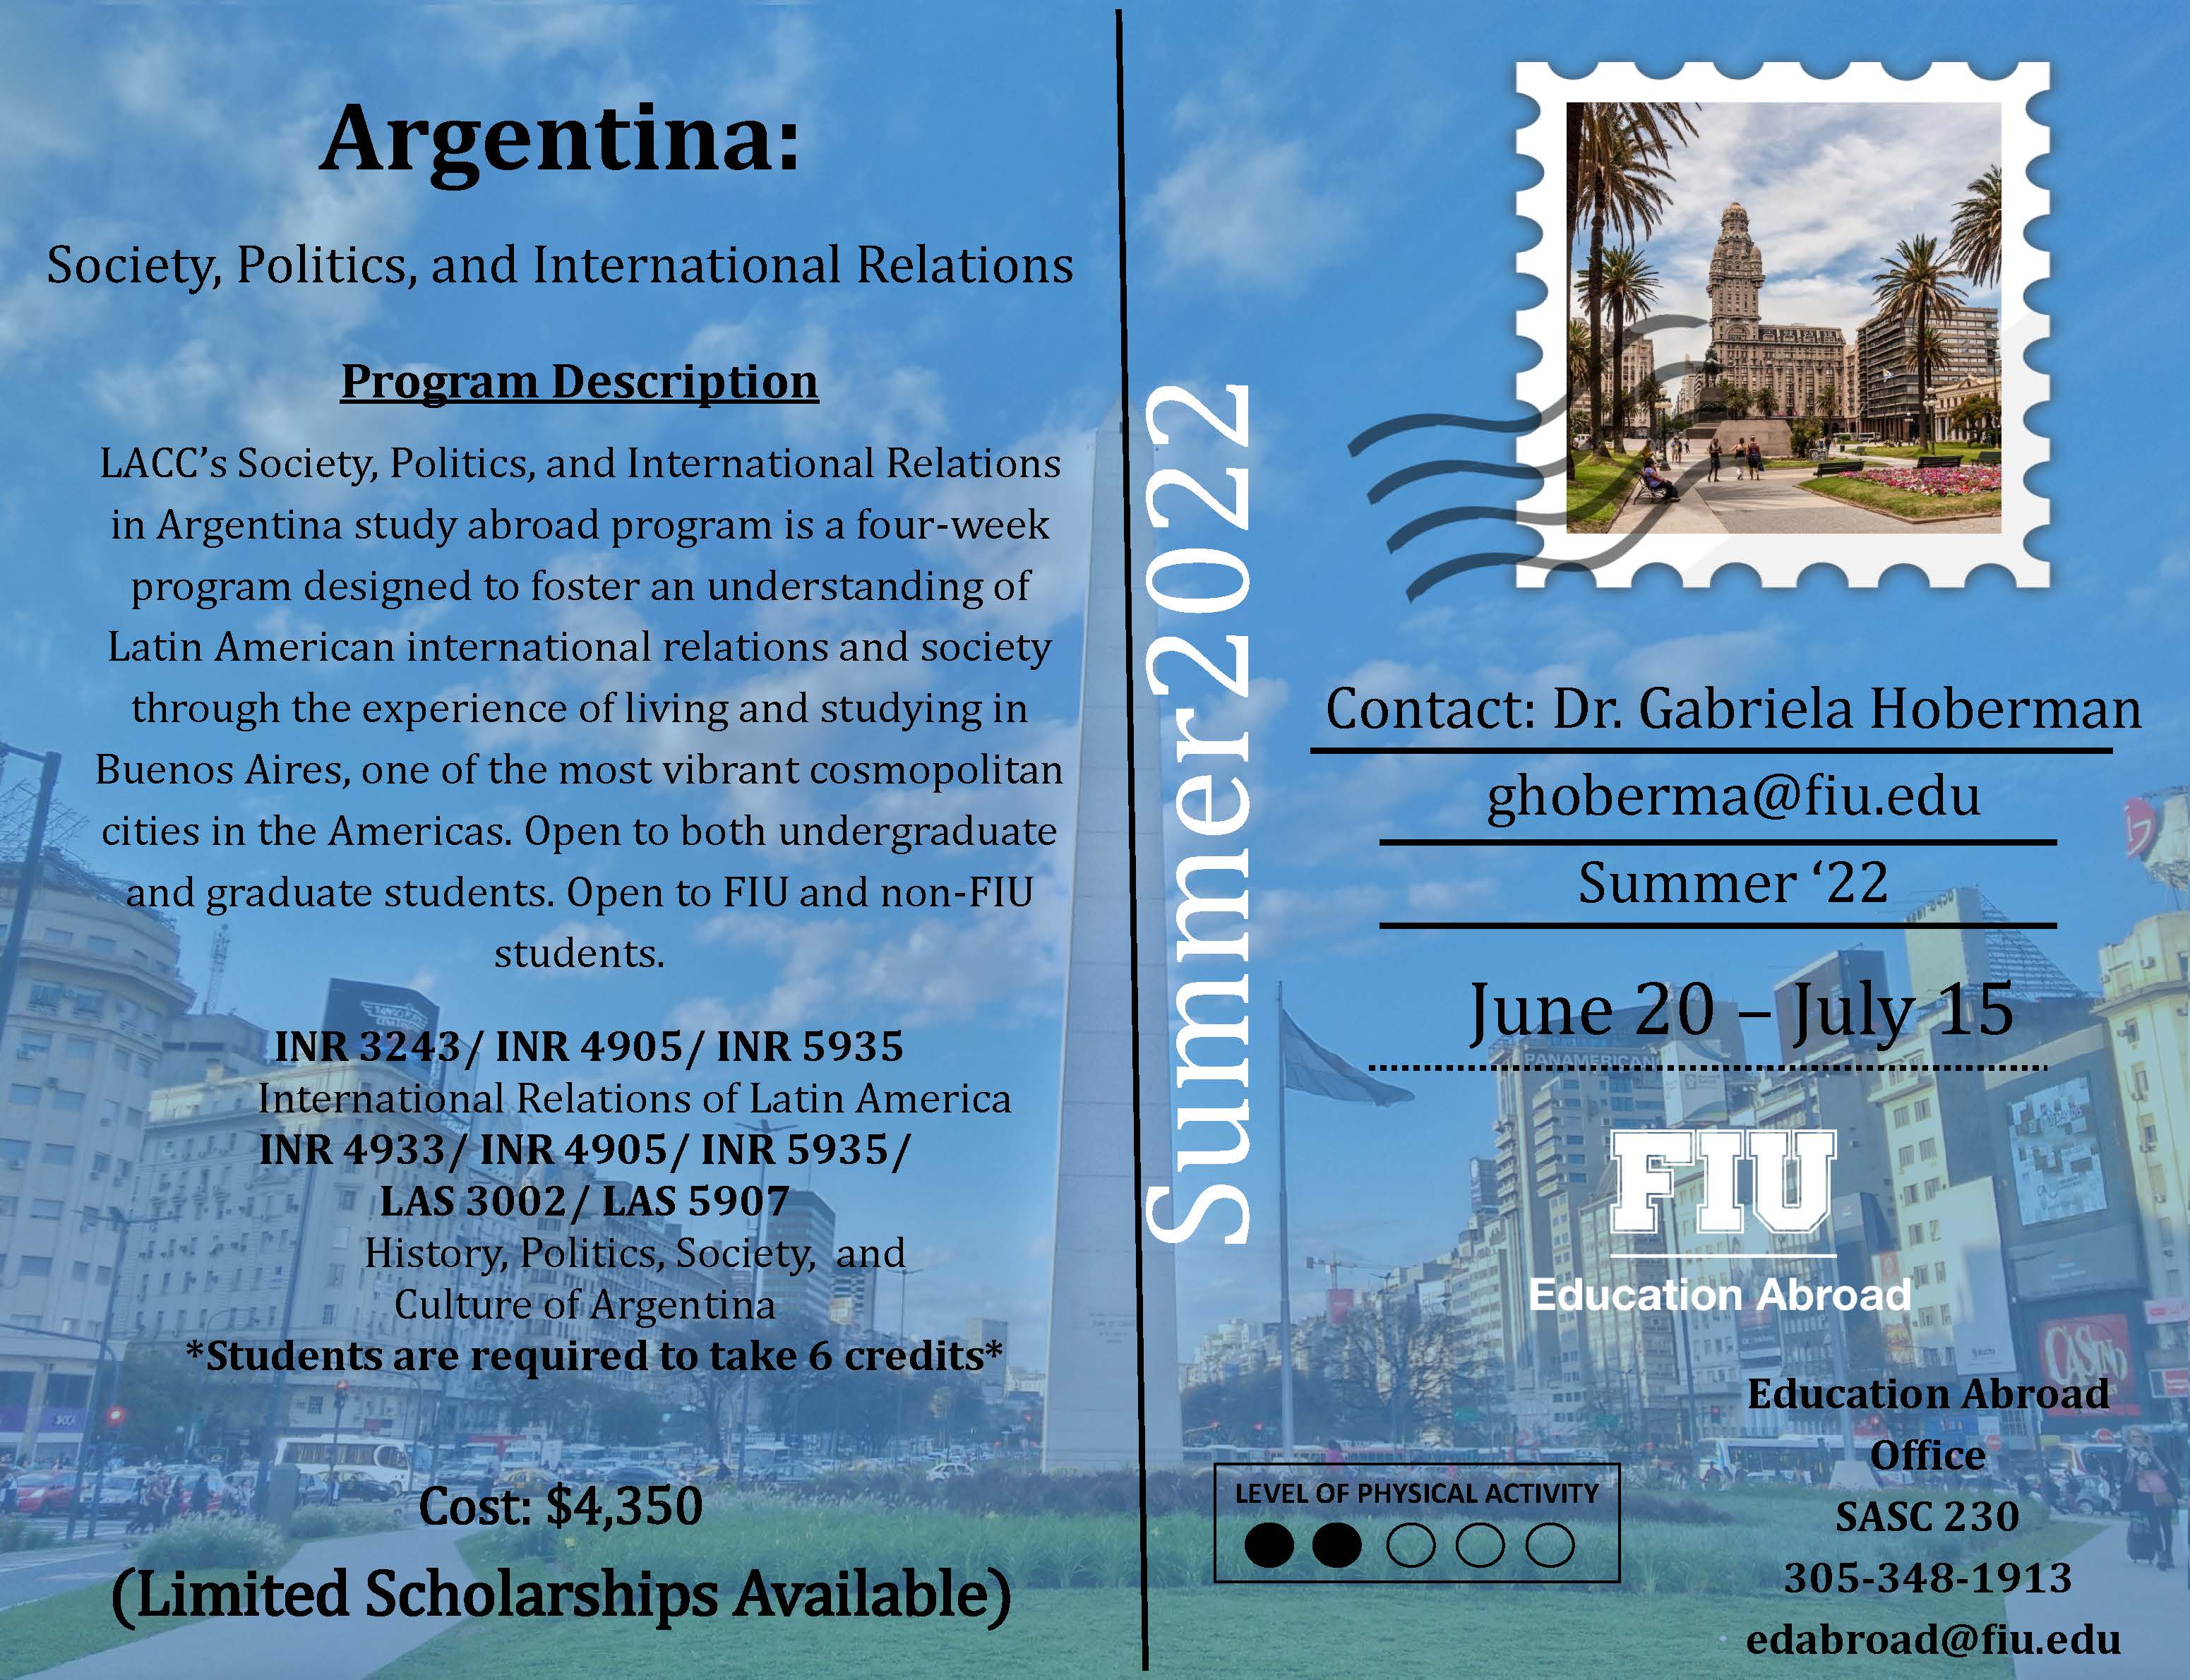 postcard_argentina-program.jpg